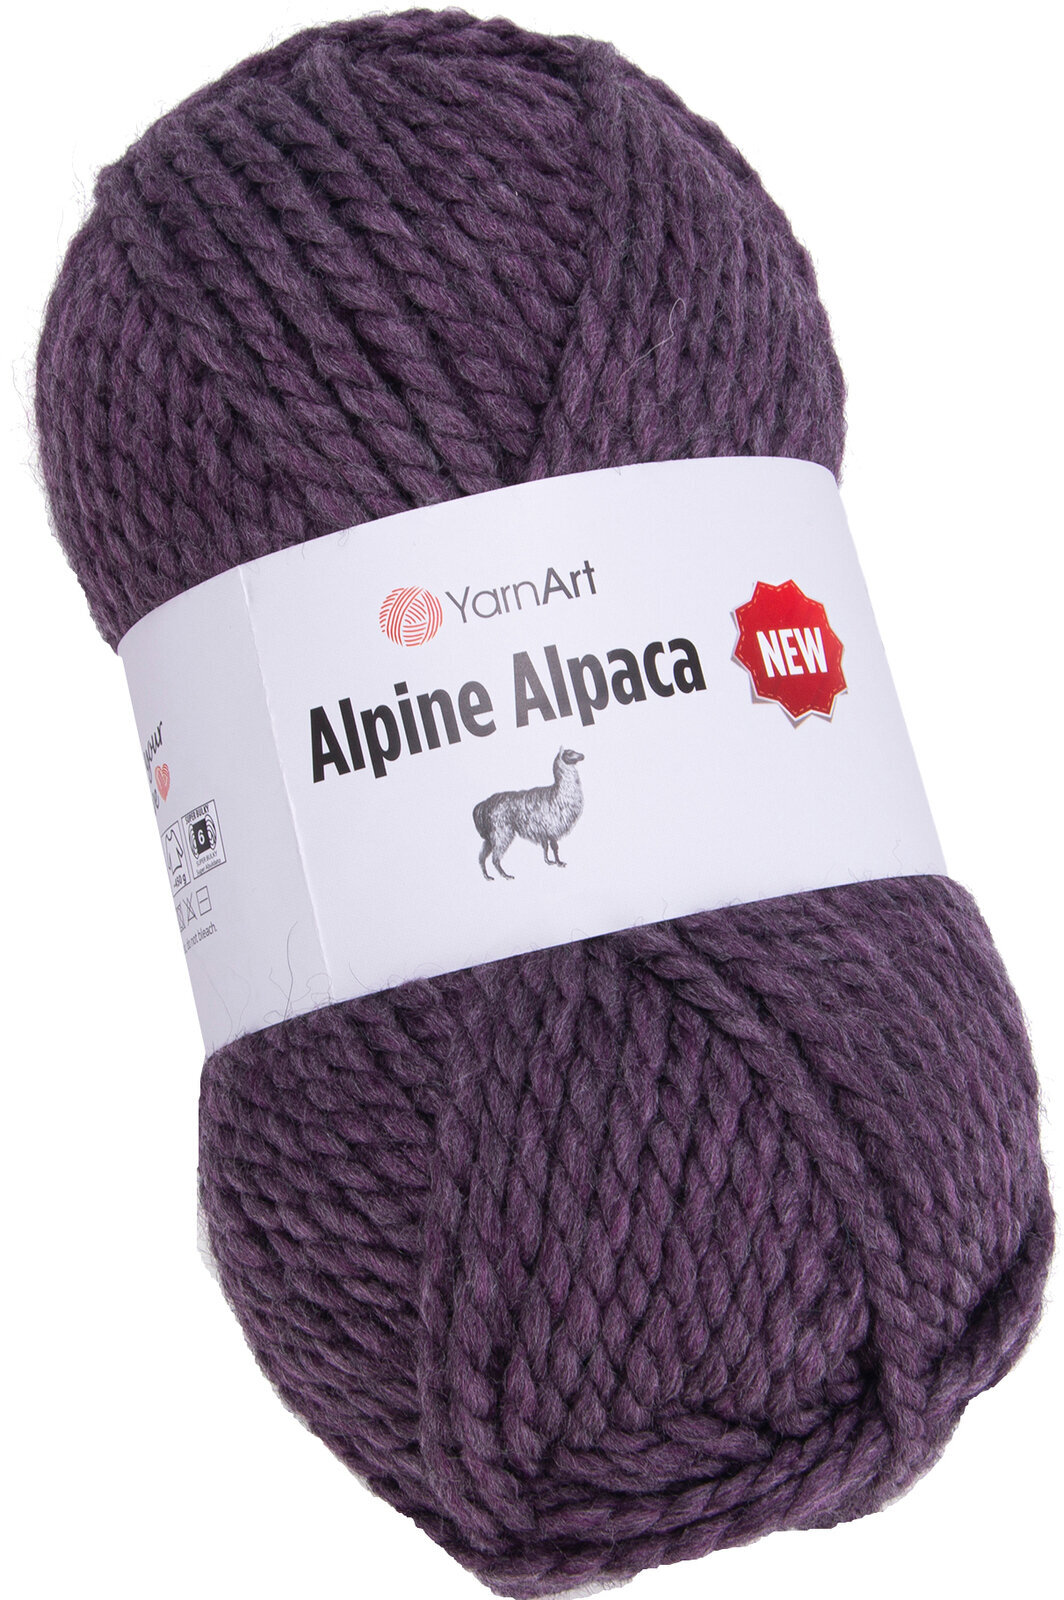 Strikkegarn Yarn Art Alpine Alpaca New 1451